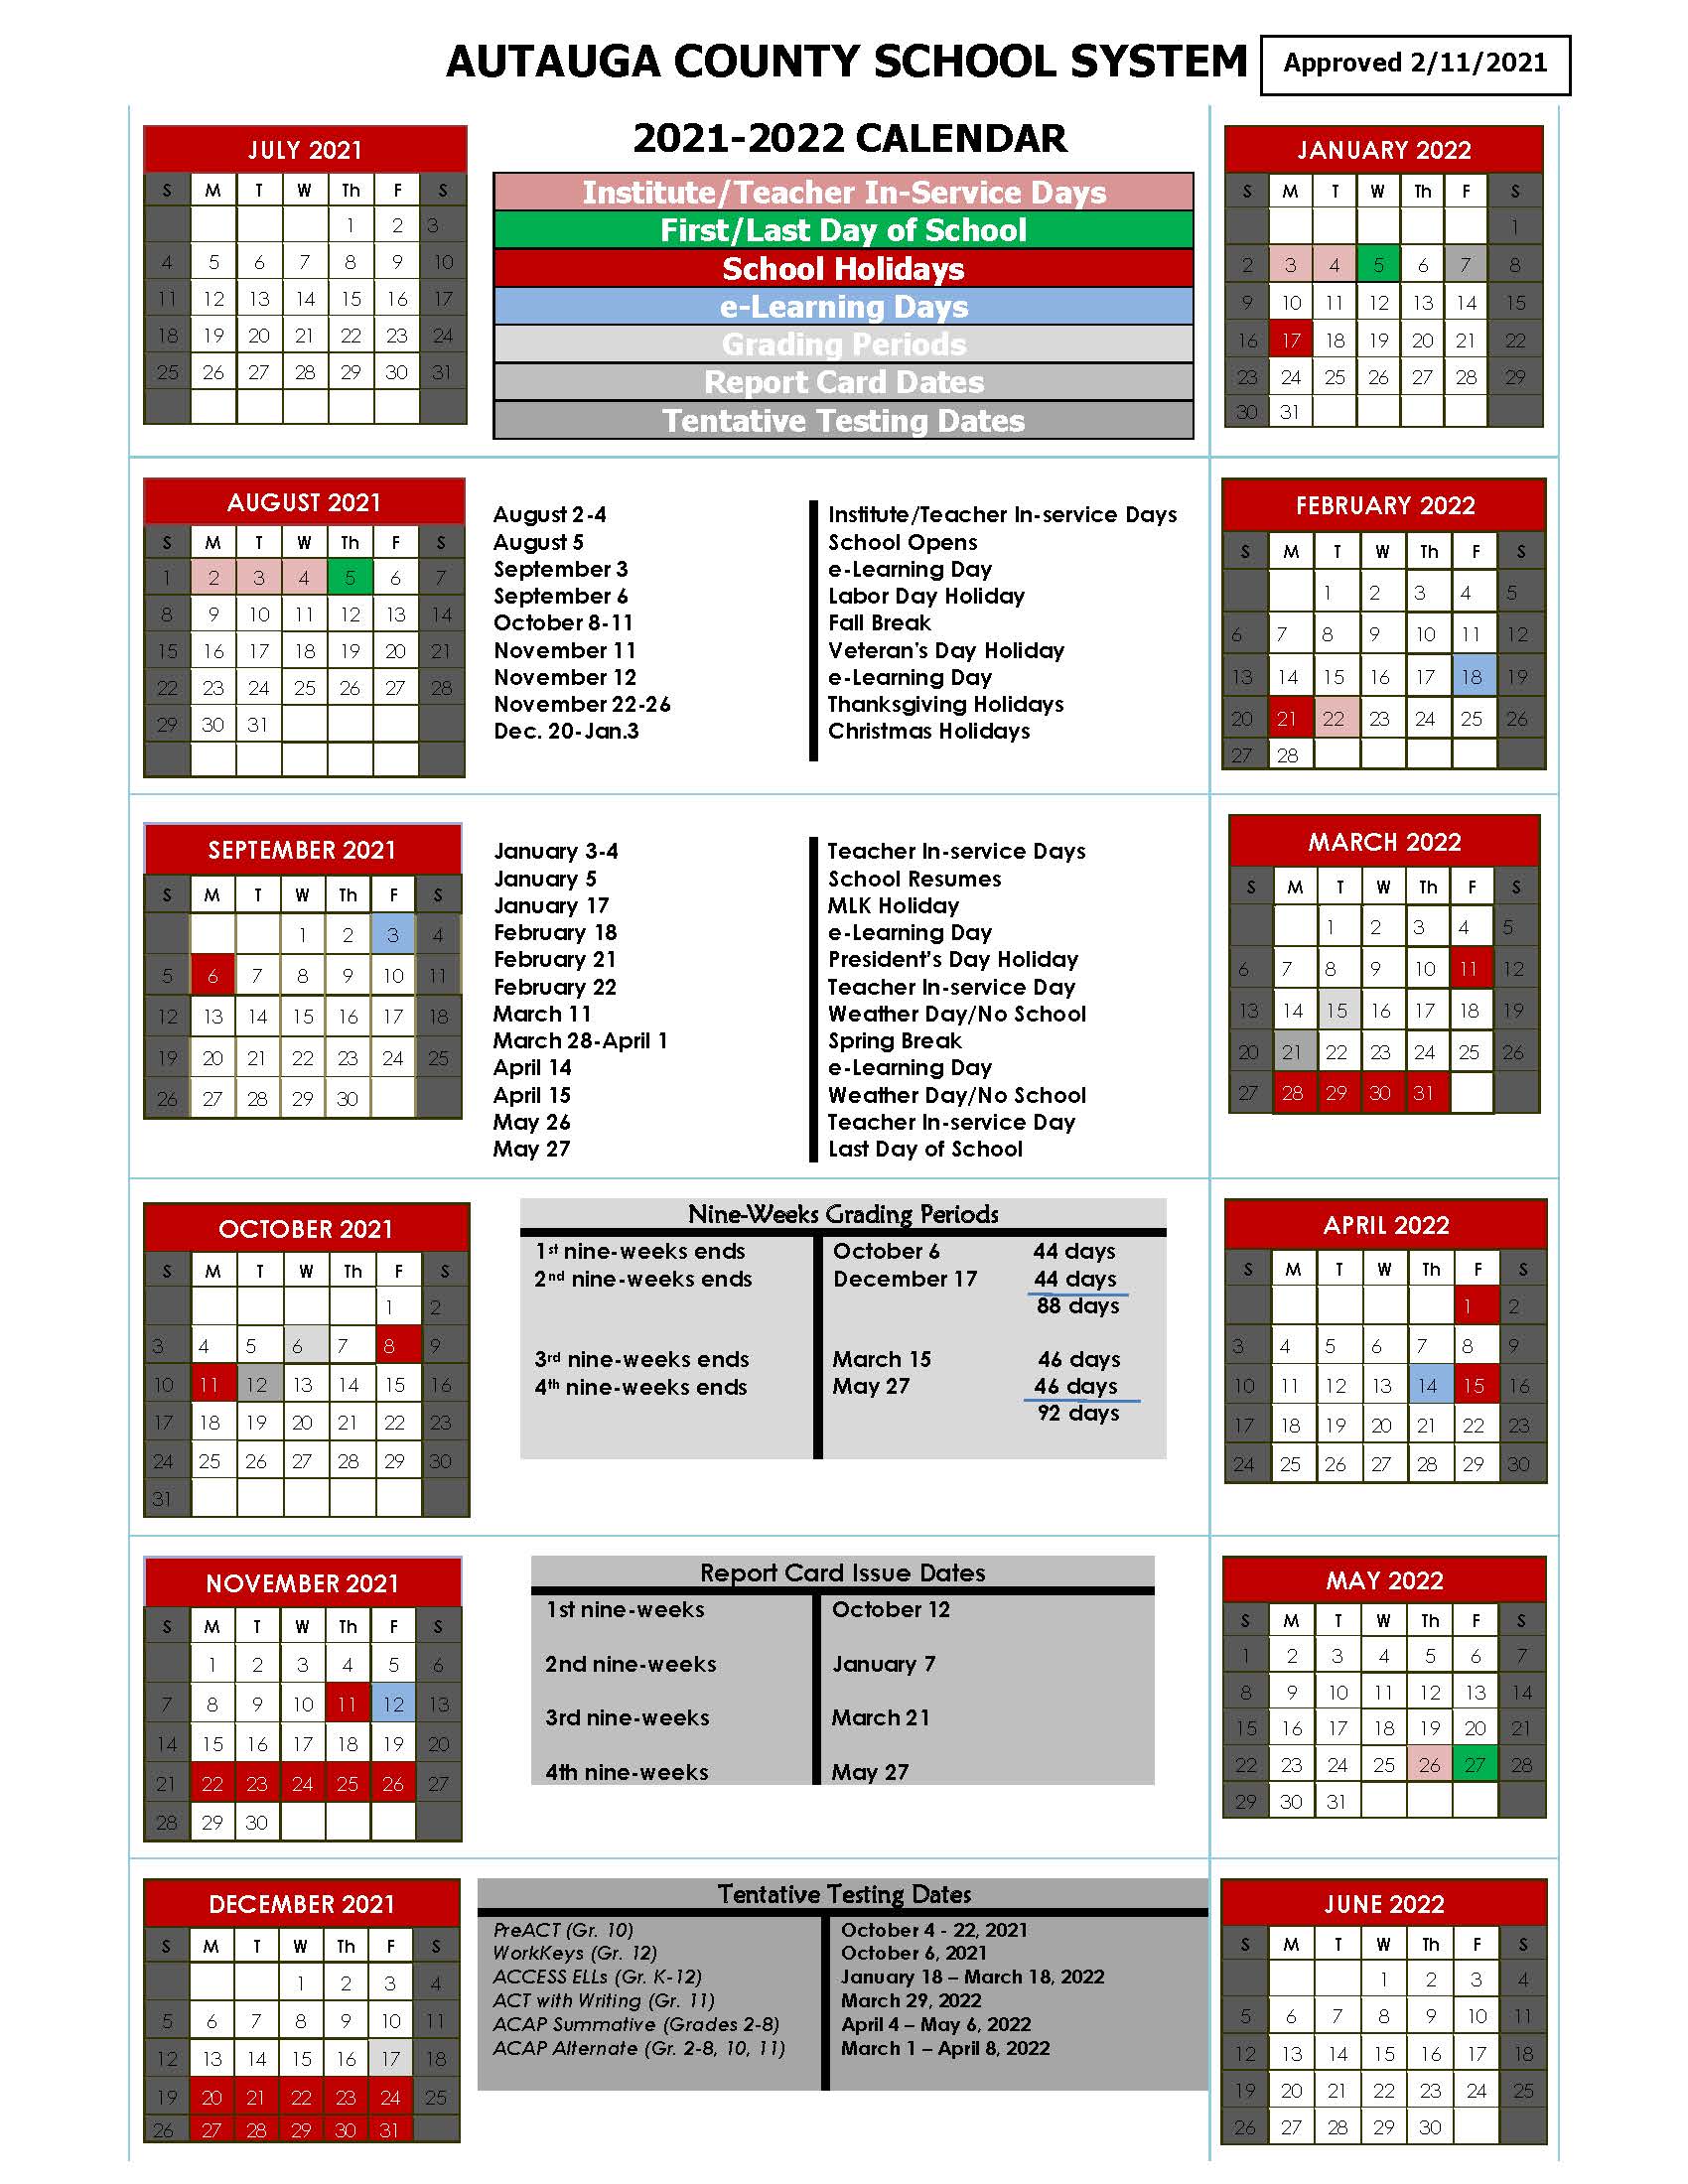 Pratt Calendar Spring 2022 2021-22 School Calendar - Daniel Pratt Elementary School